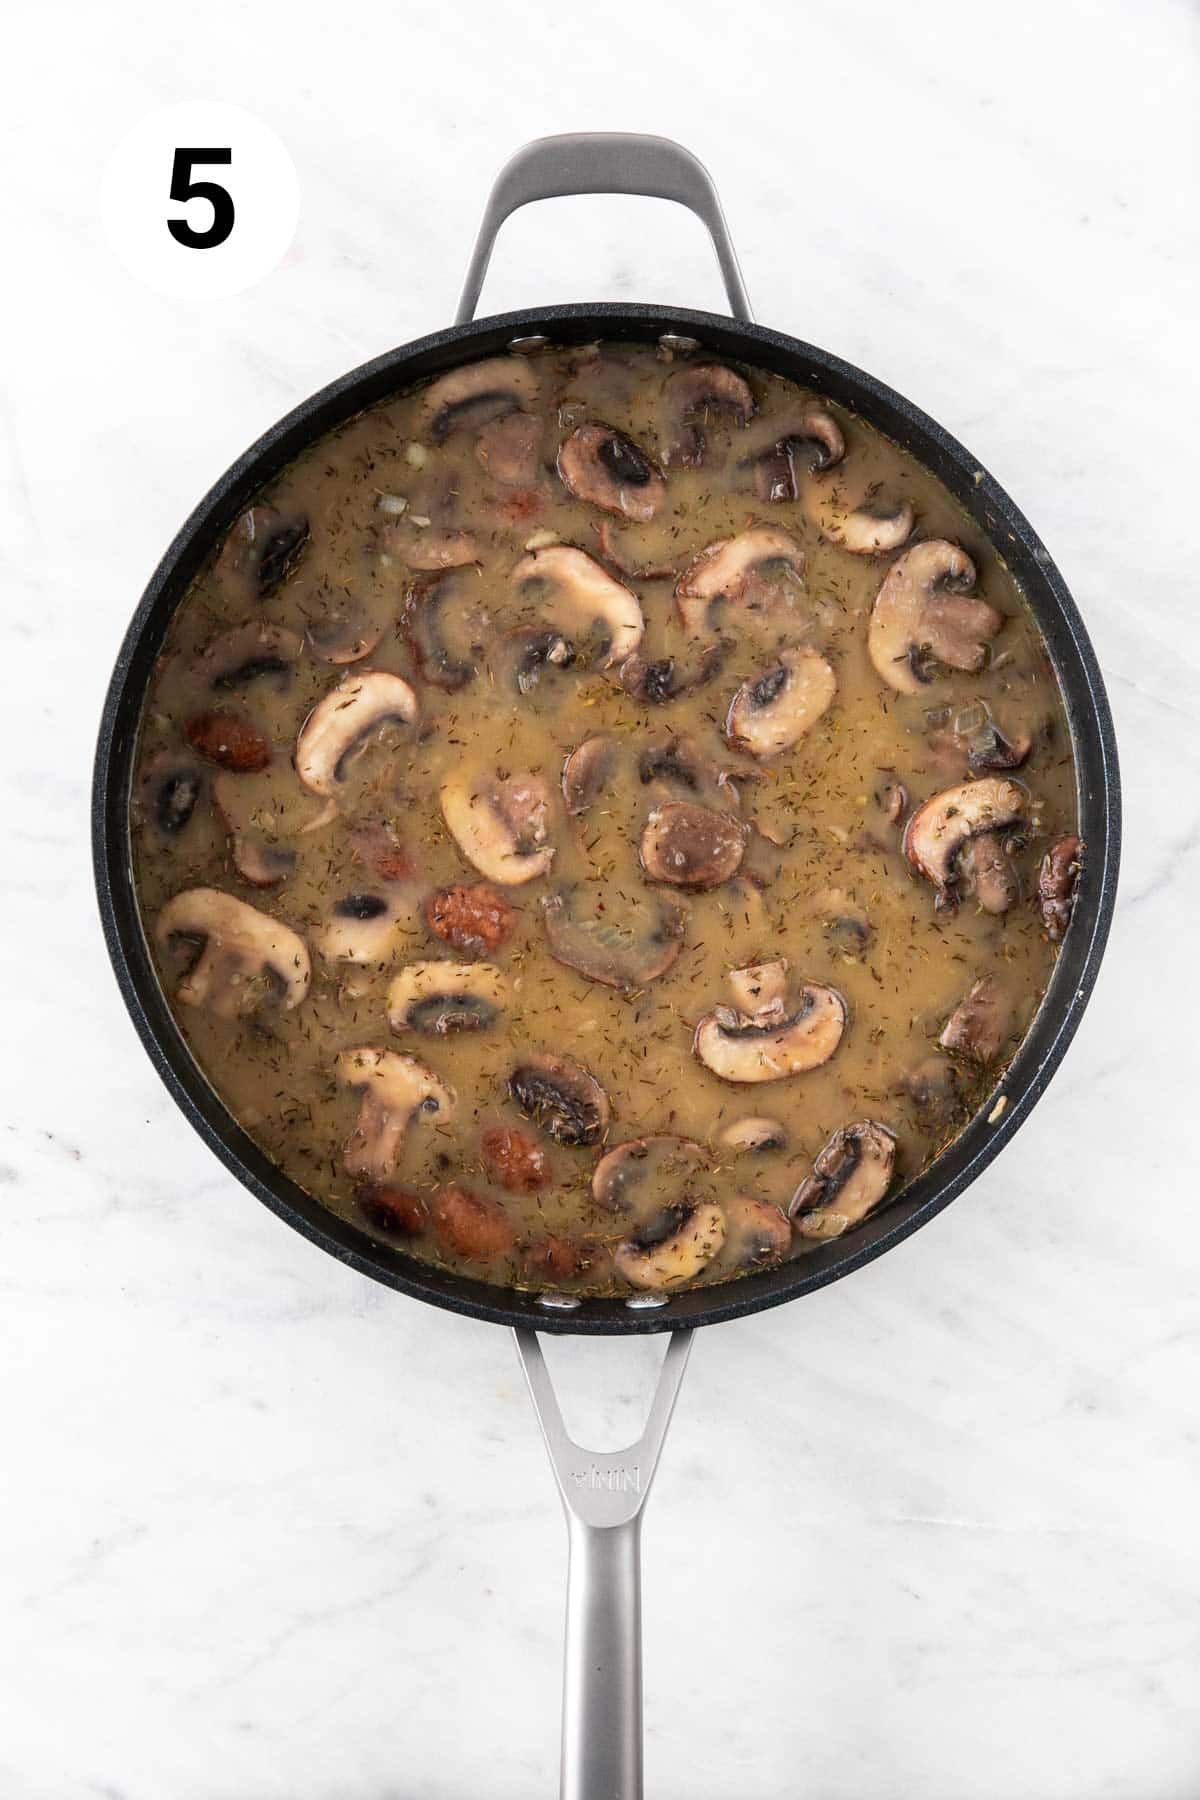 Vegan mushroom gravy with spices before thickening.